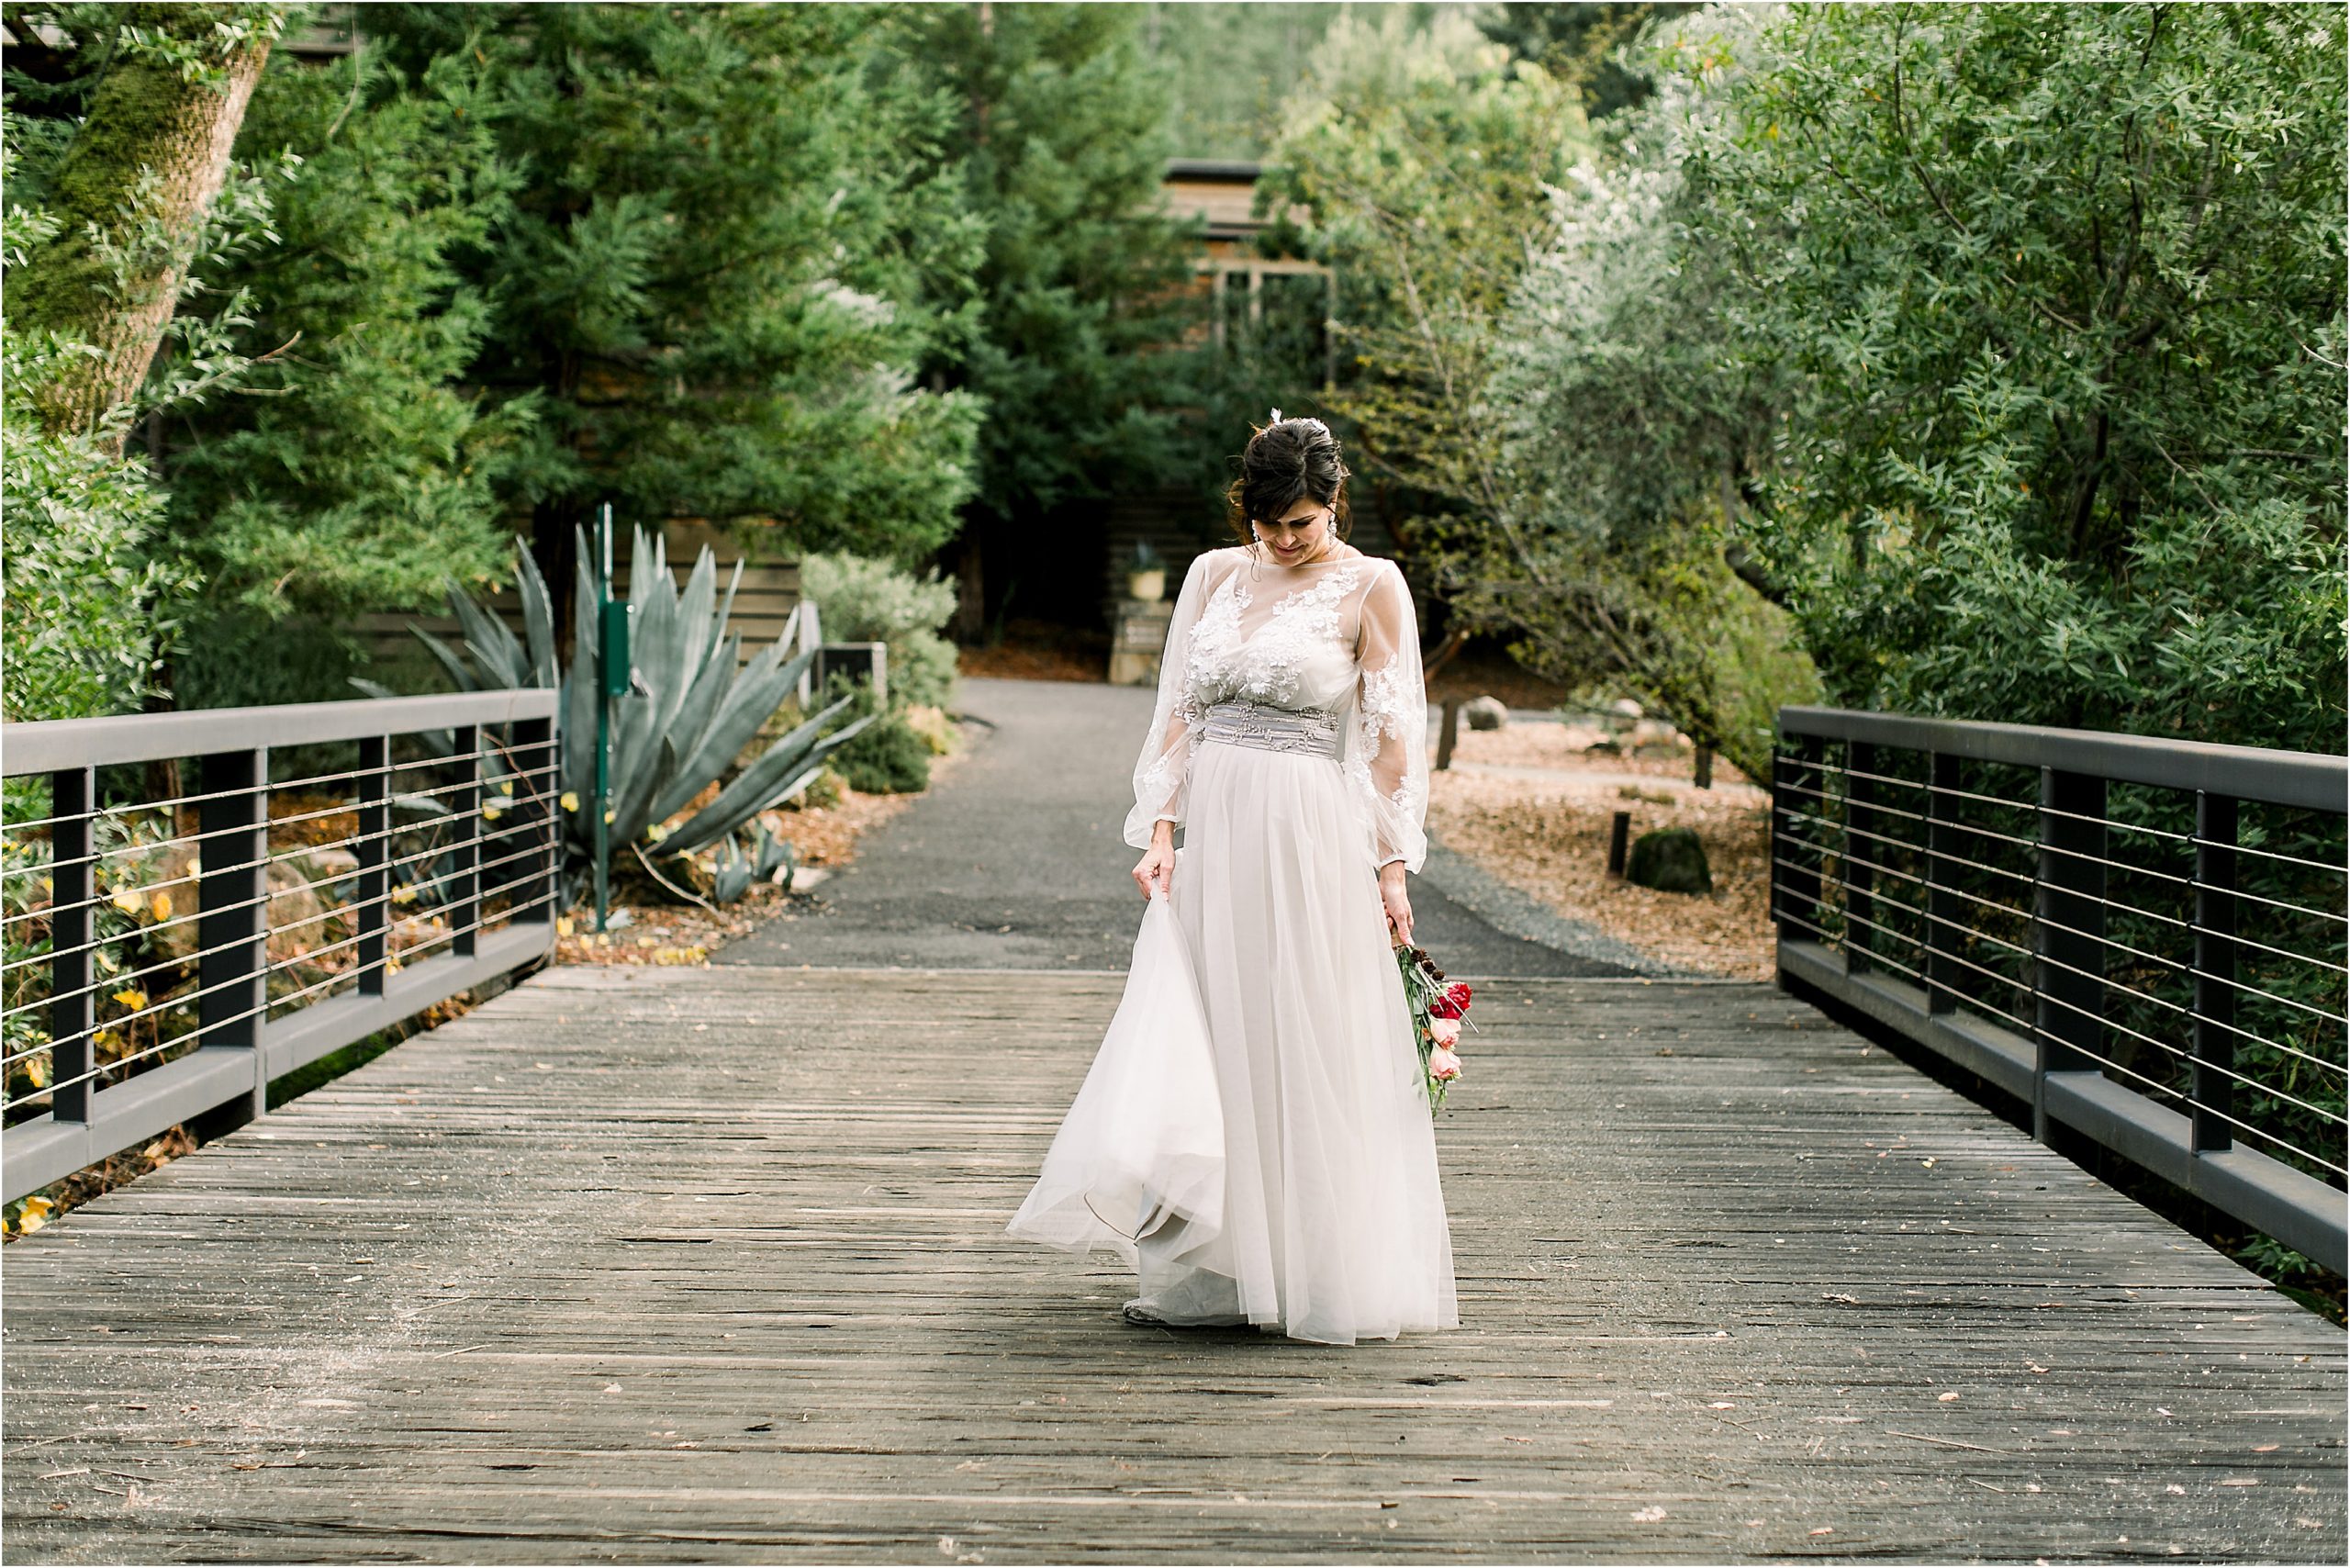 Calistoga Ranch Weddings Amy Jordan Photography